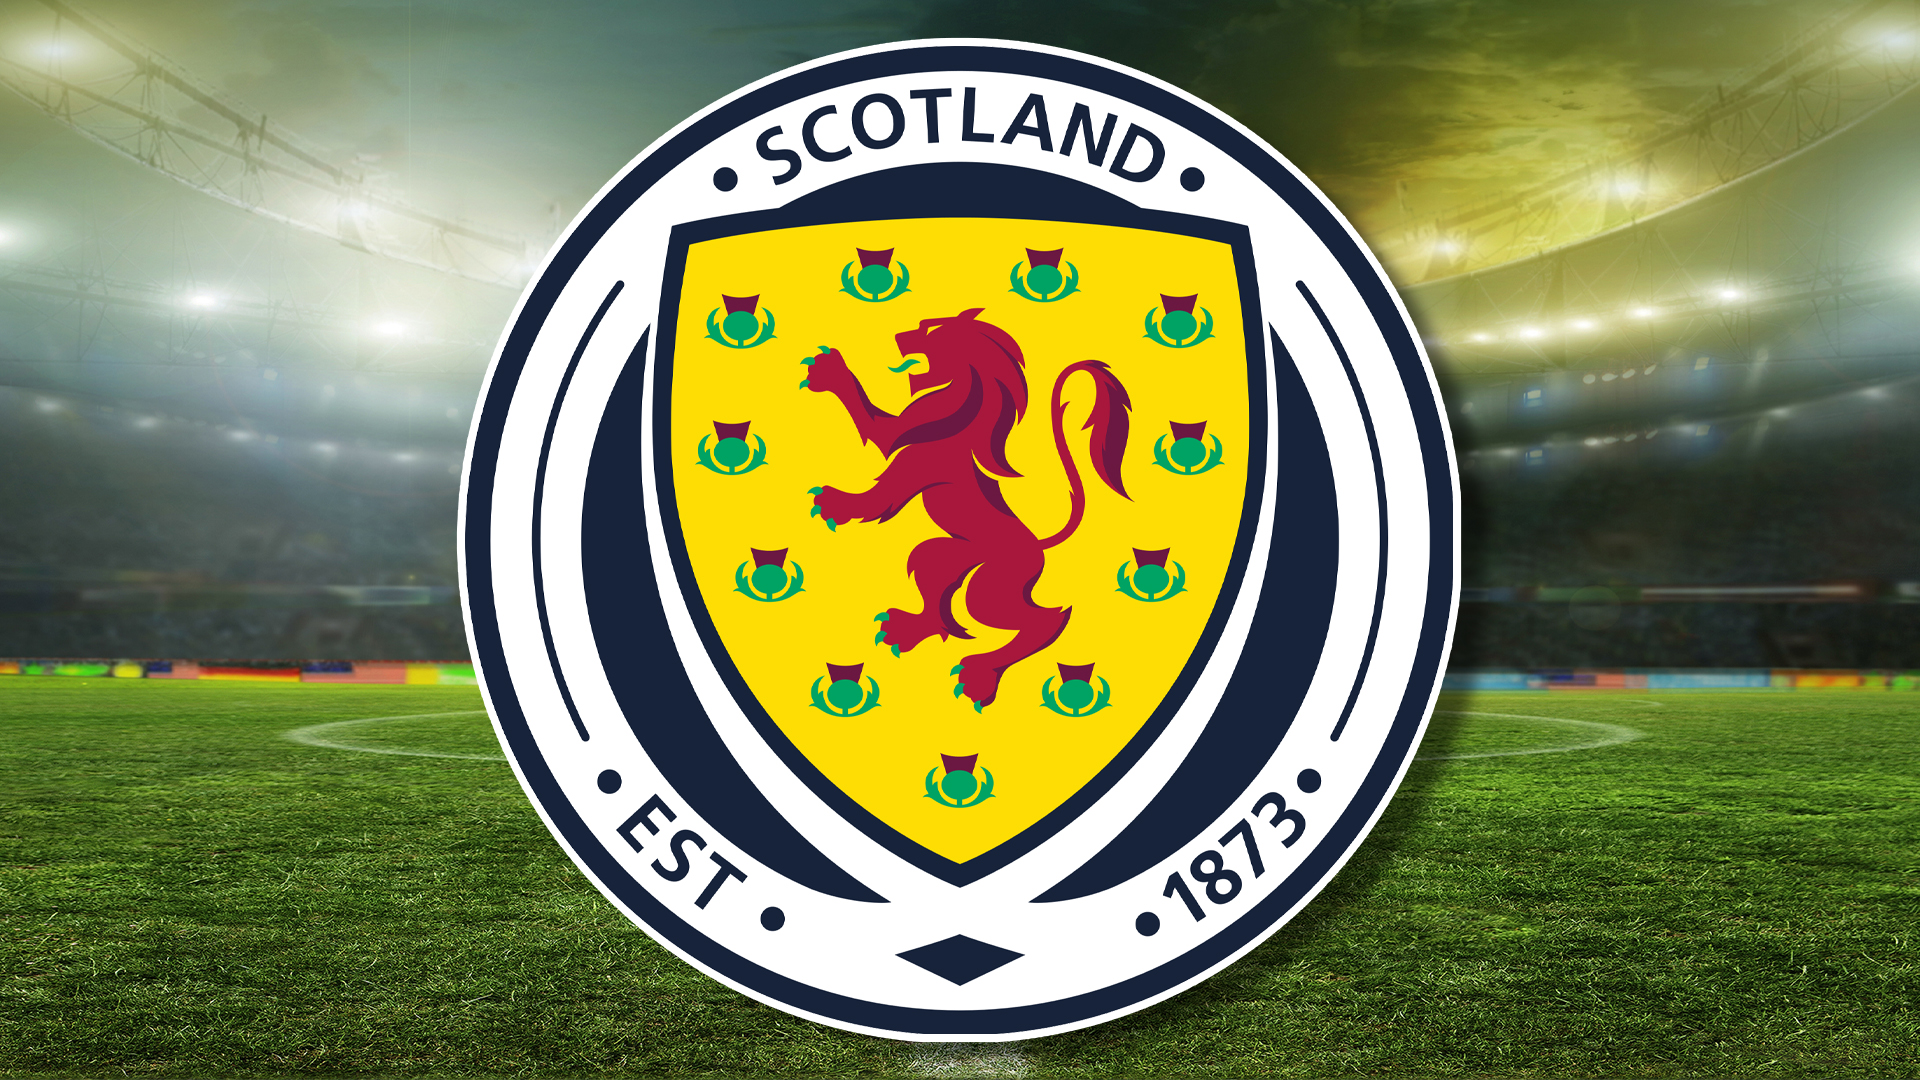 Scottish FA badge